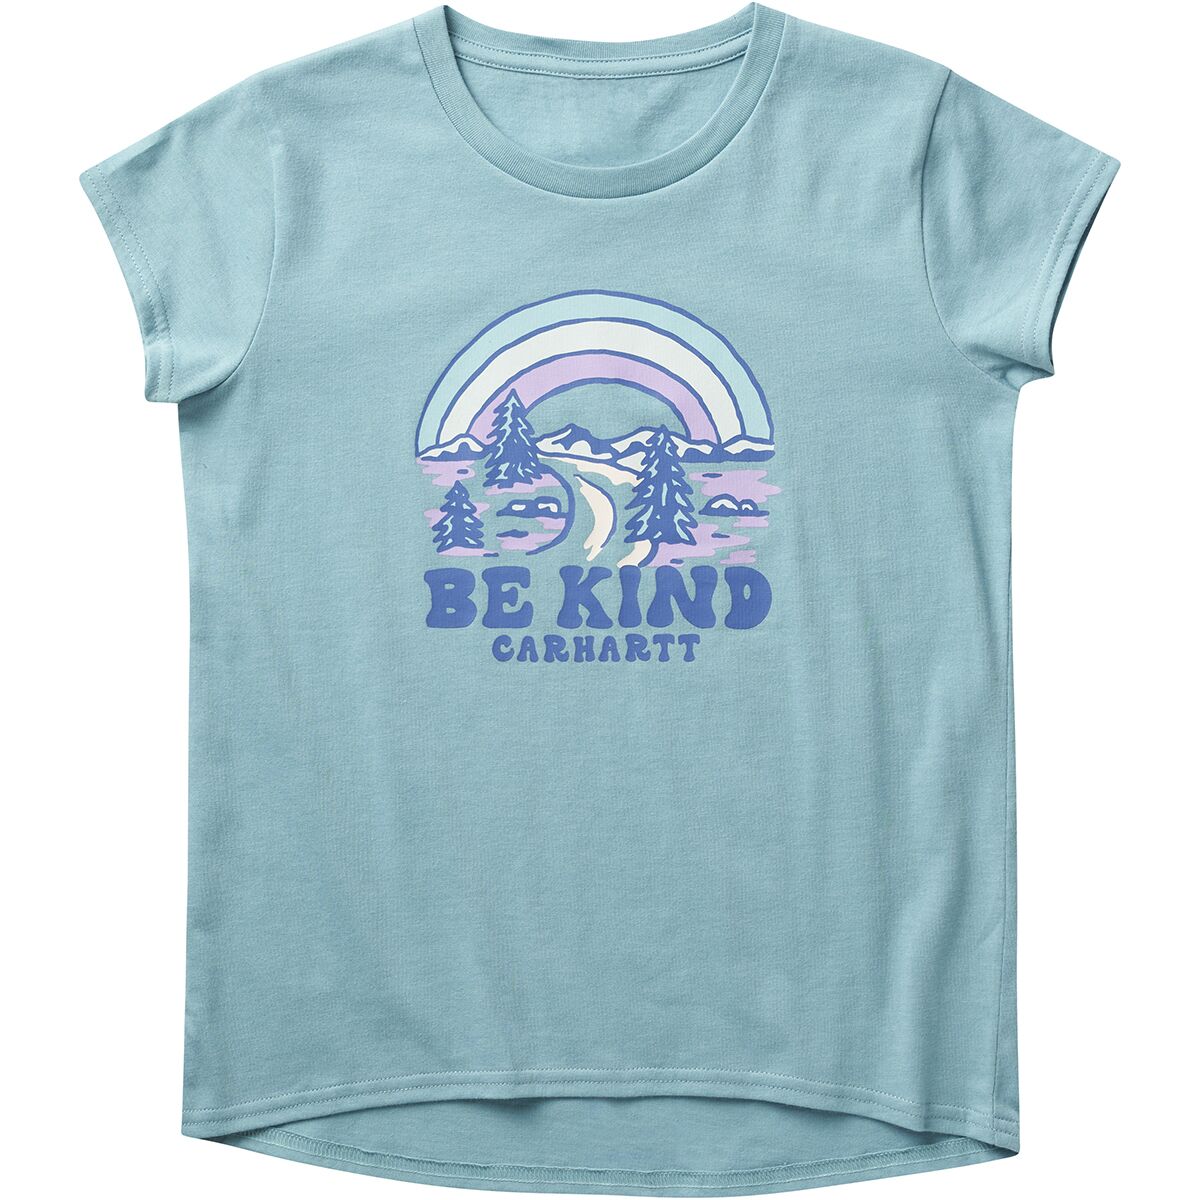 Carhartt Be Kind Short-Sleeve Graphic T-Shirt - Toddler Girls'